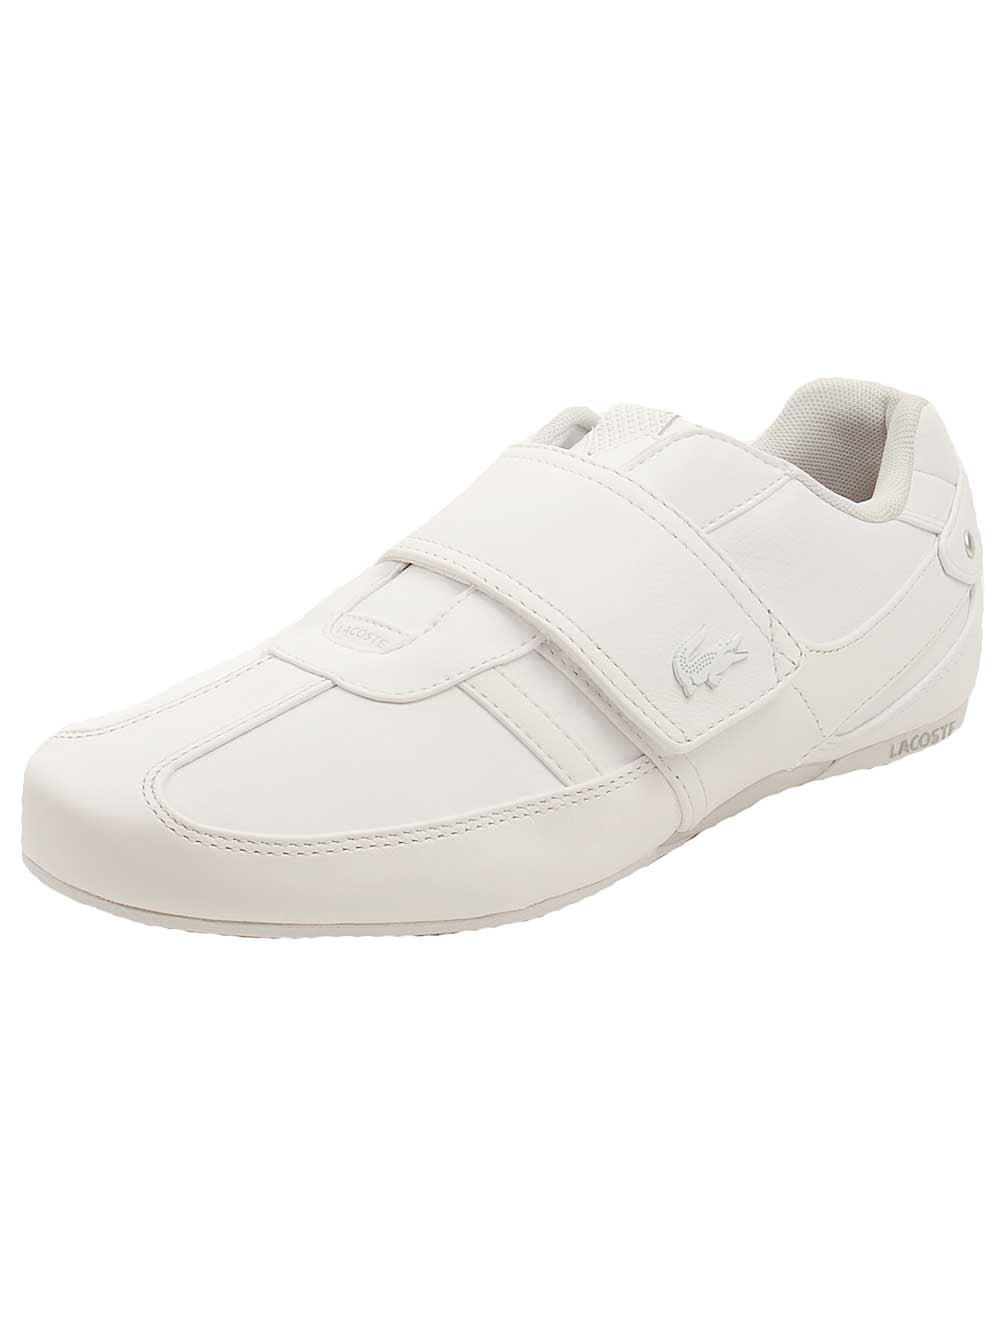 Lacoste Mens PRM Sneakers in White - Walmart.com